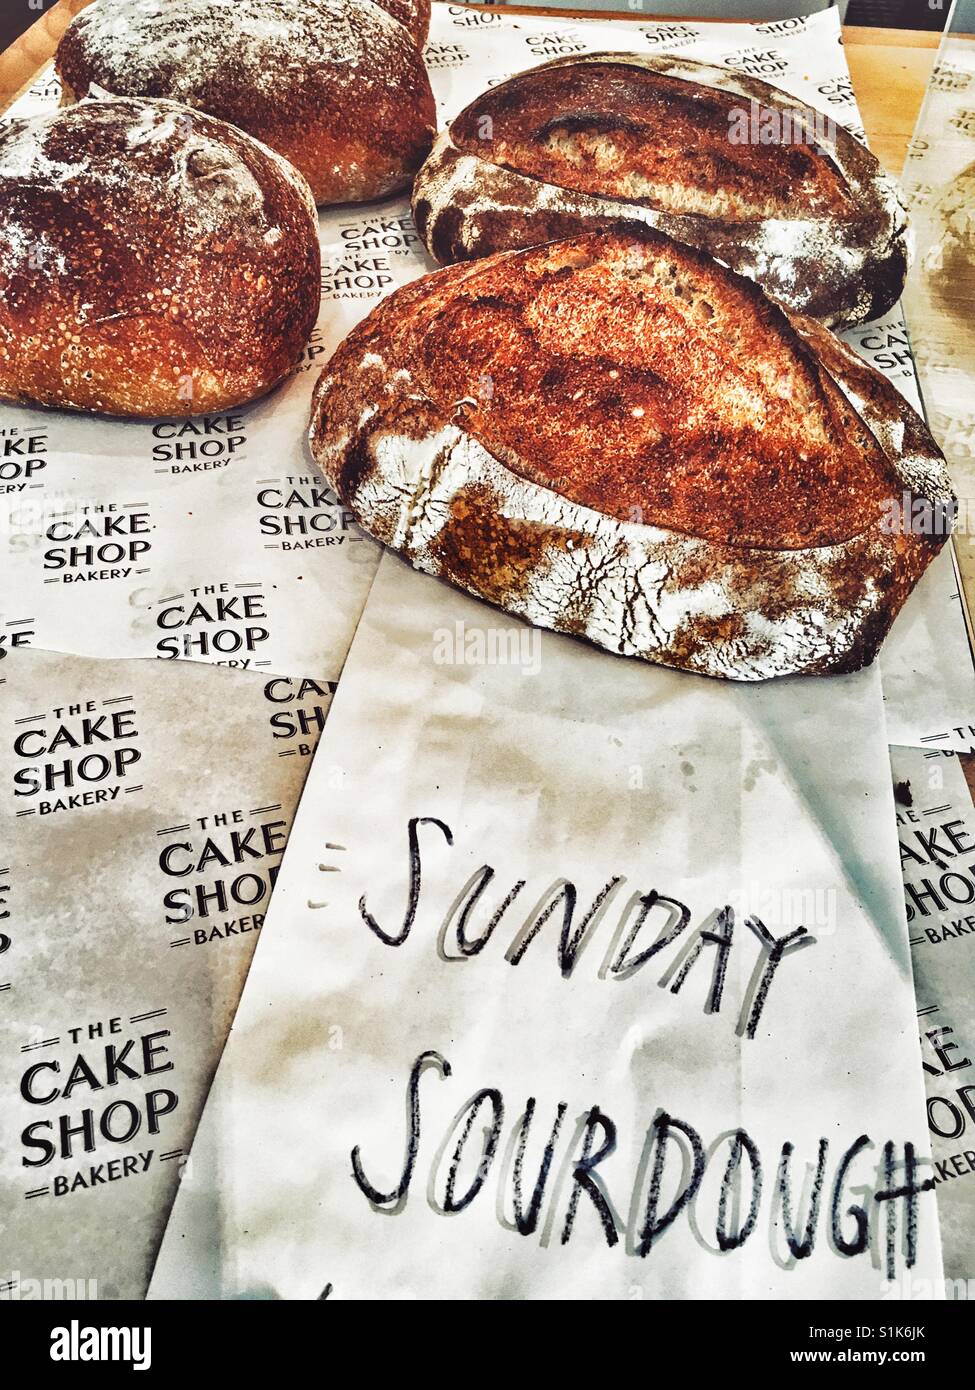 The Cake Shop Bakery Sunday Sourdough bread, Woodbridge, Suffolk, UK. Stock Photo